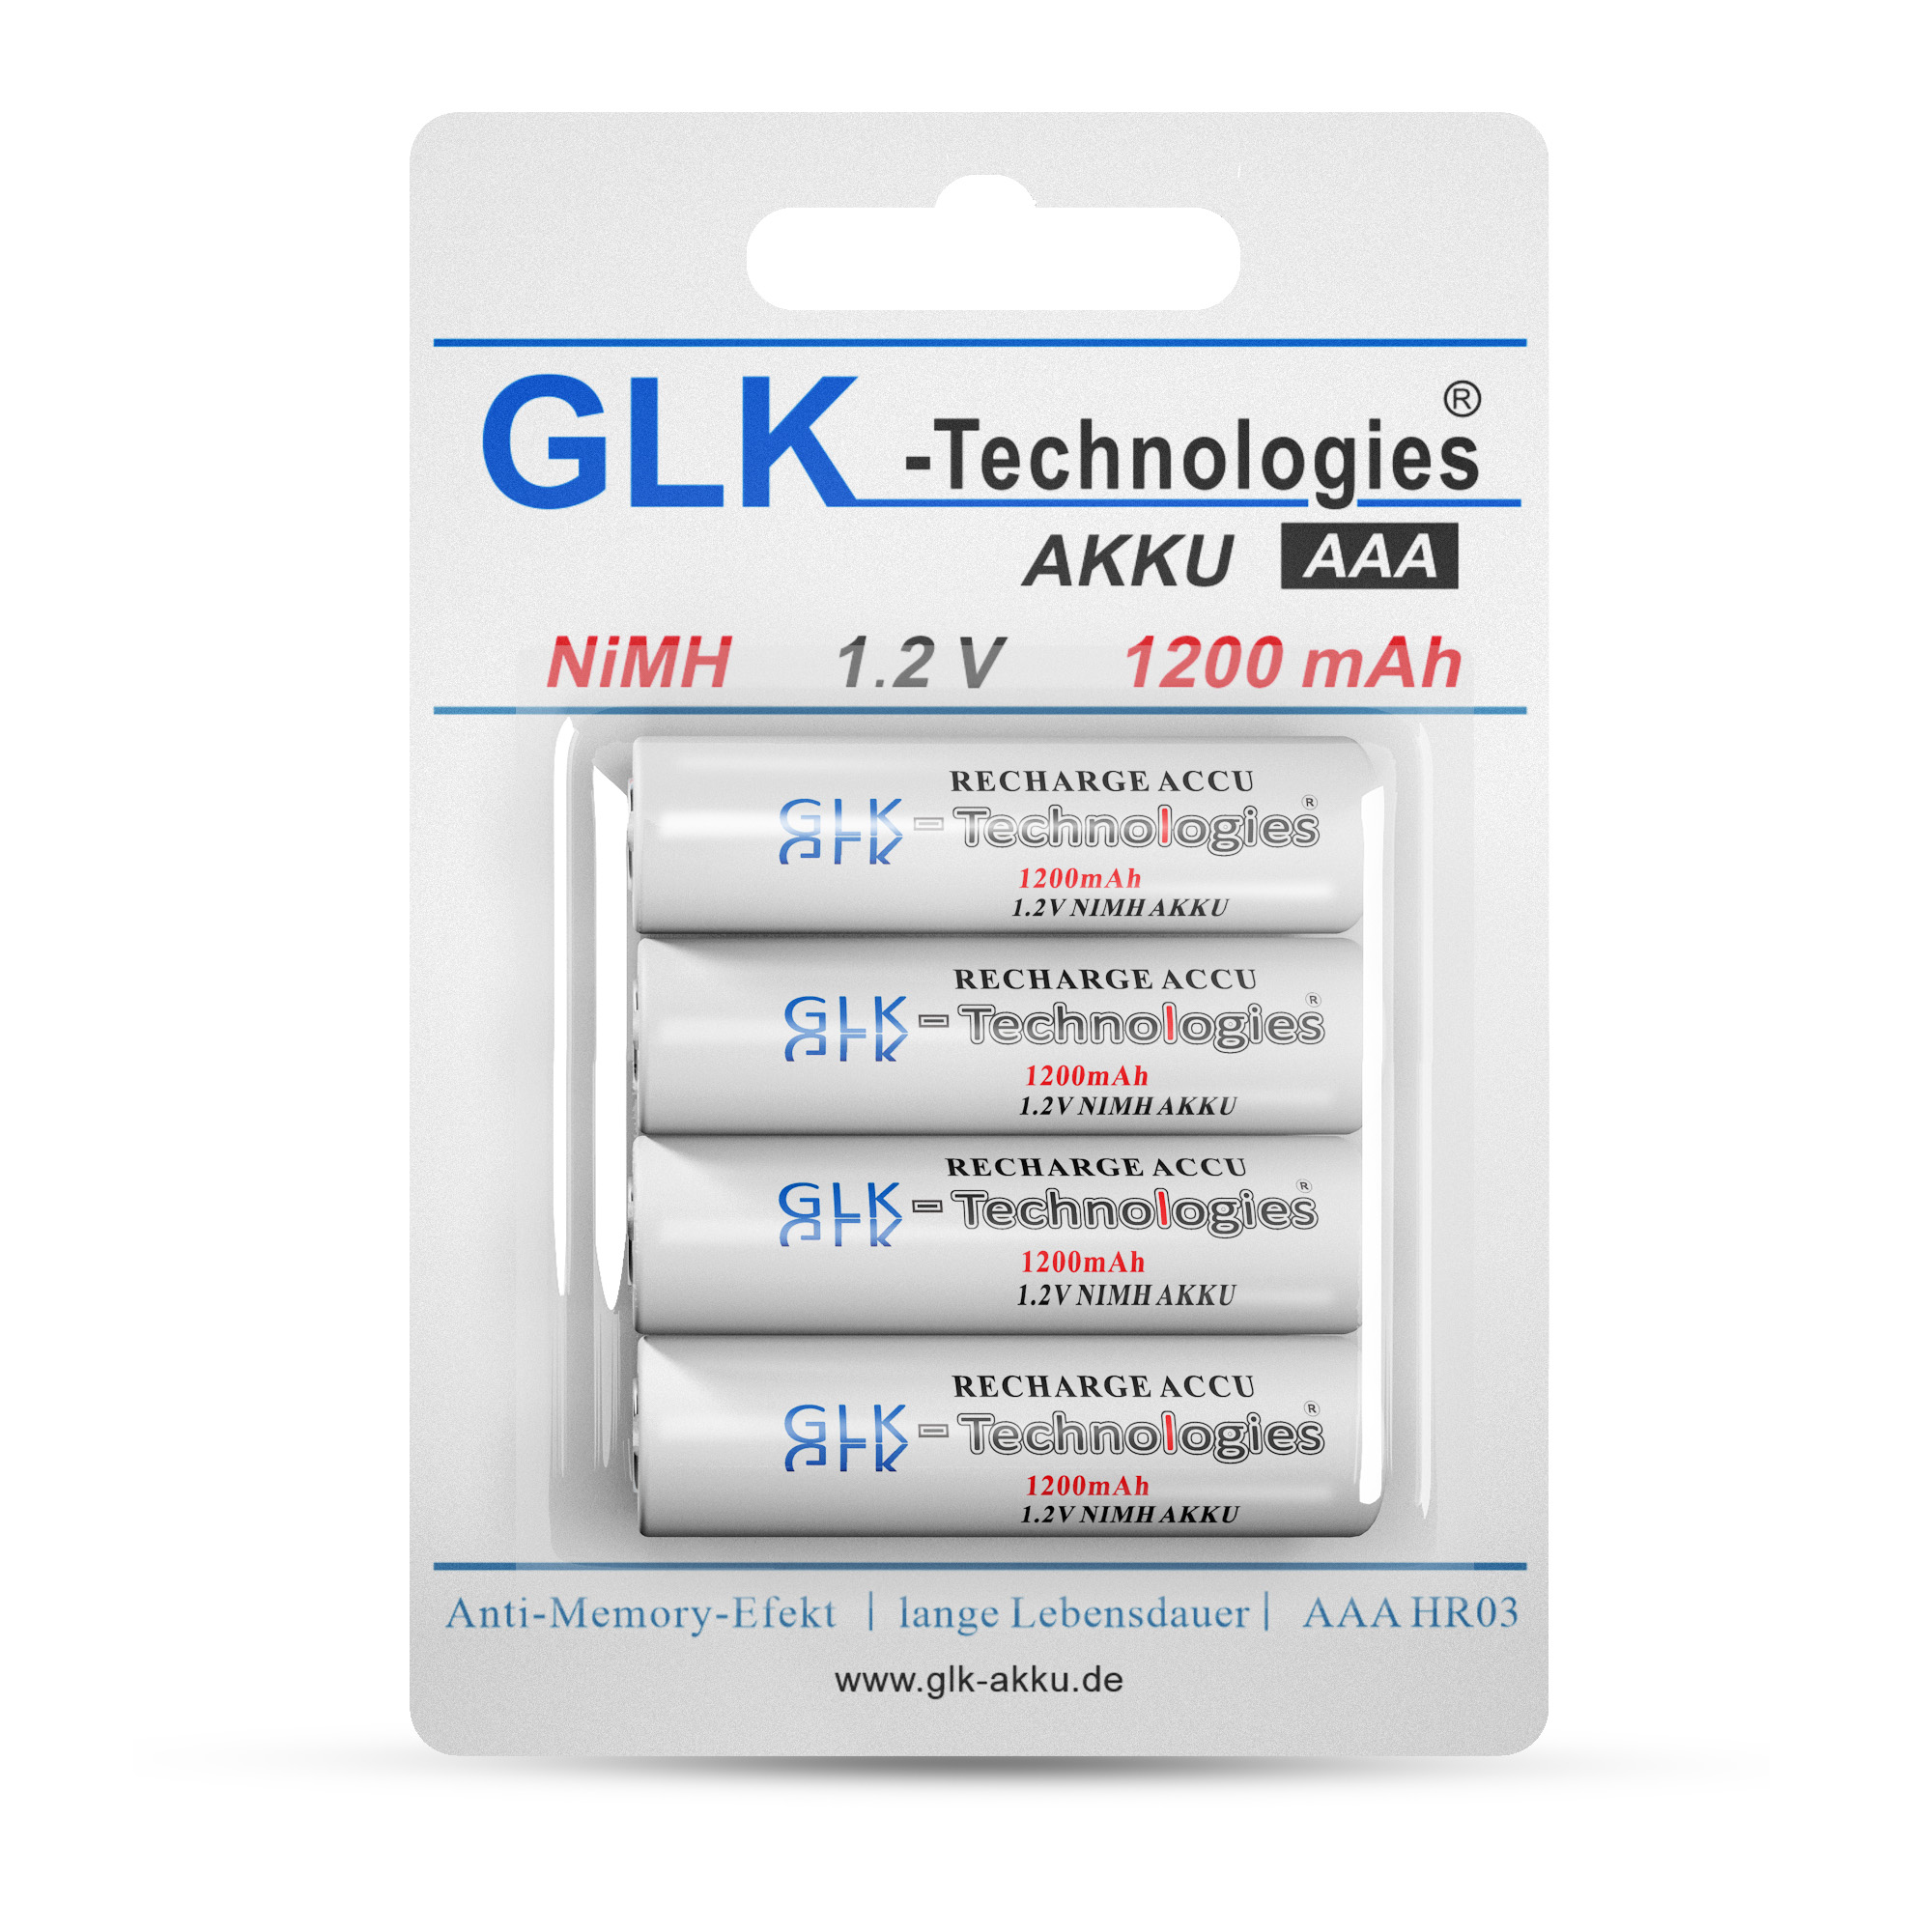 GLK-TECHNOLOGIES AAA HR03 Ni-MH wiederaufladbar Ni-MH, Inklusive Akku, AAA 1200mAh Ladegerät